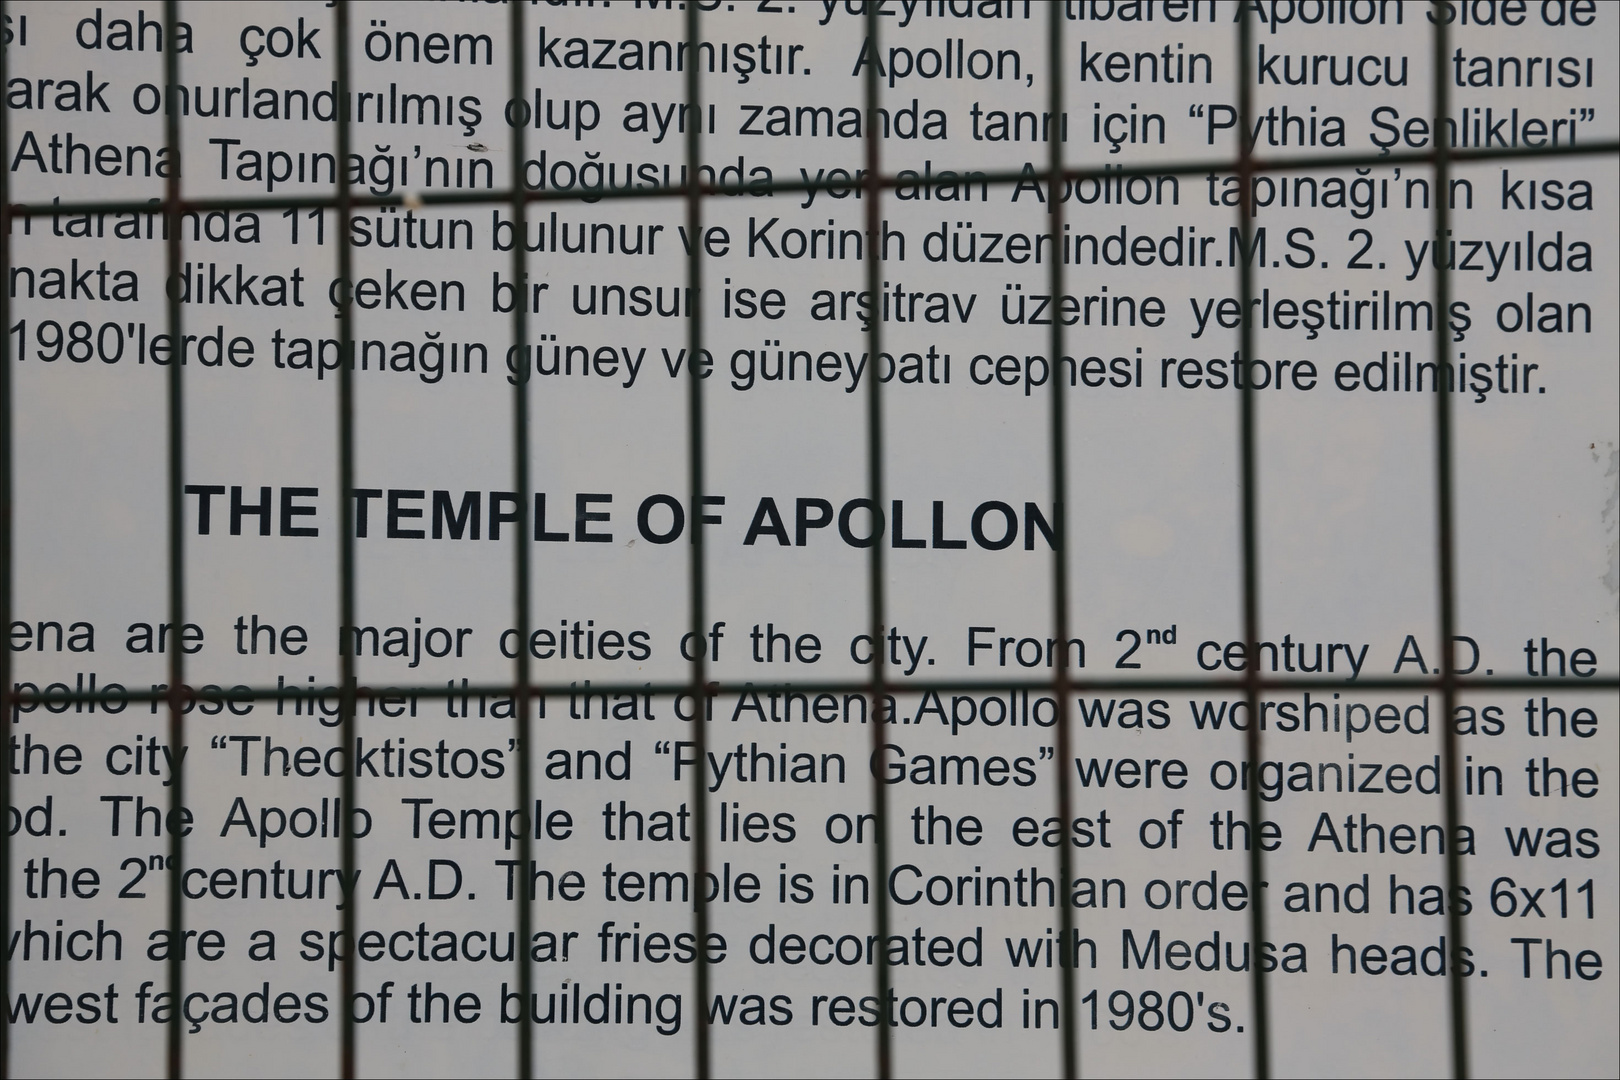 TEMPLE OF APOLLON